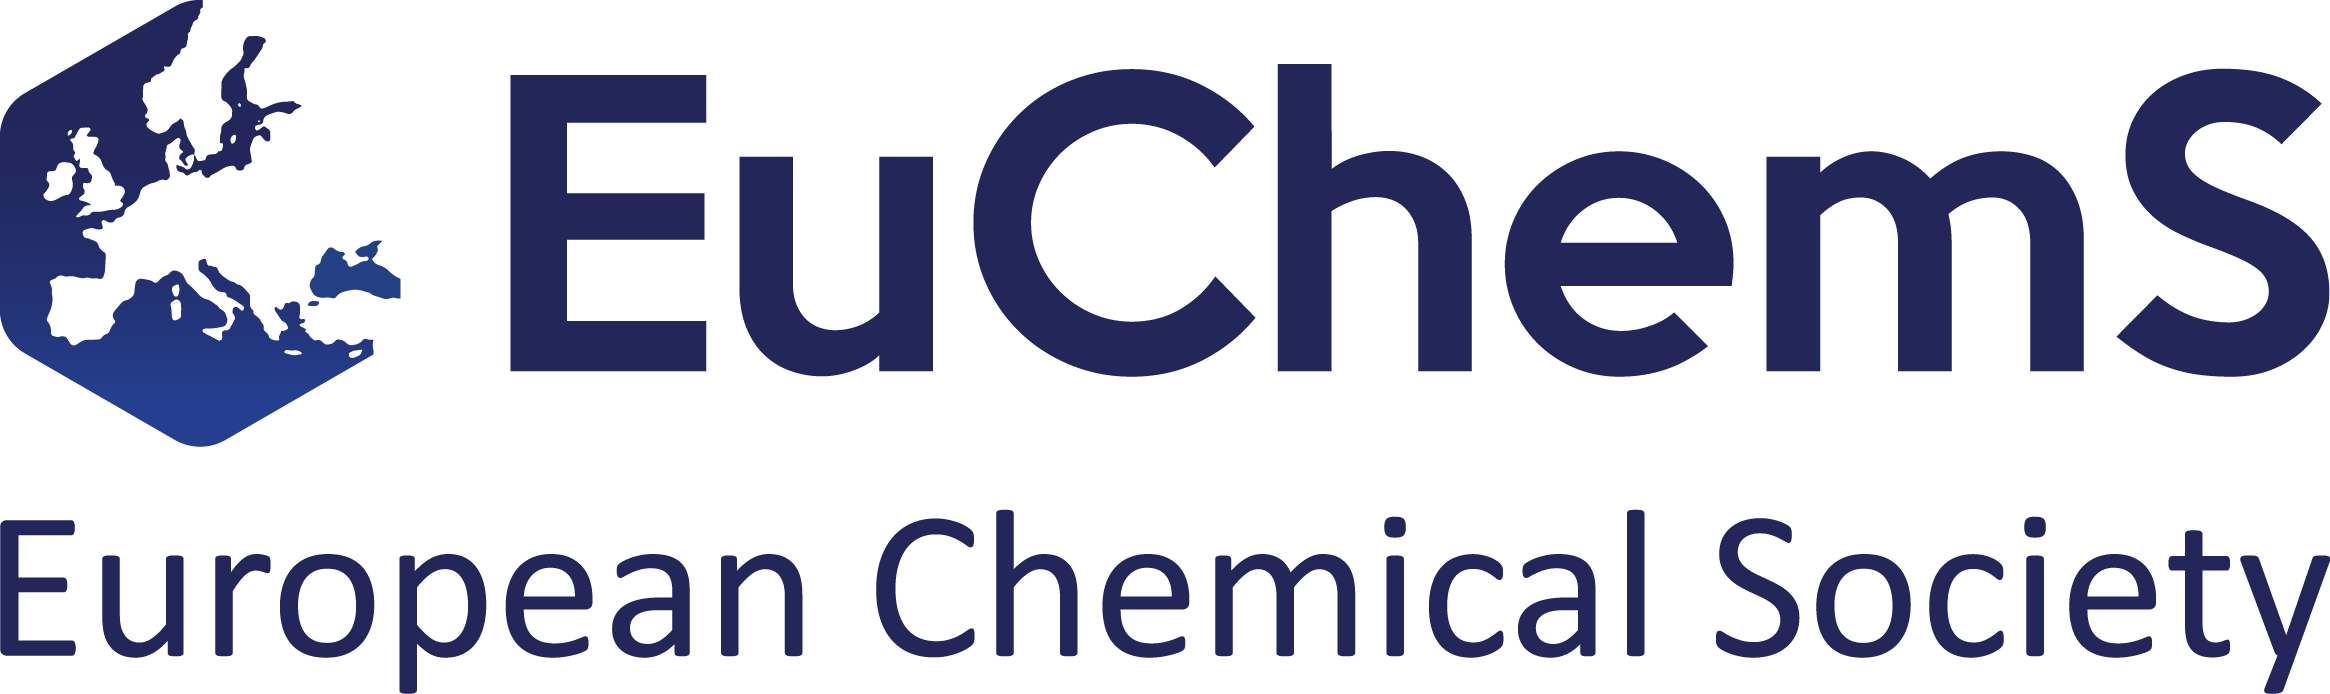 European Chemical Society